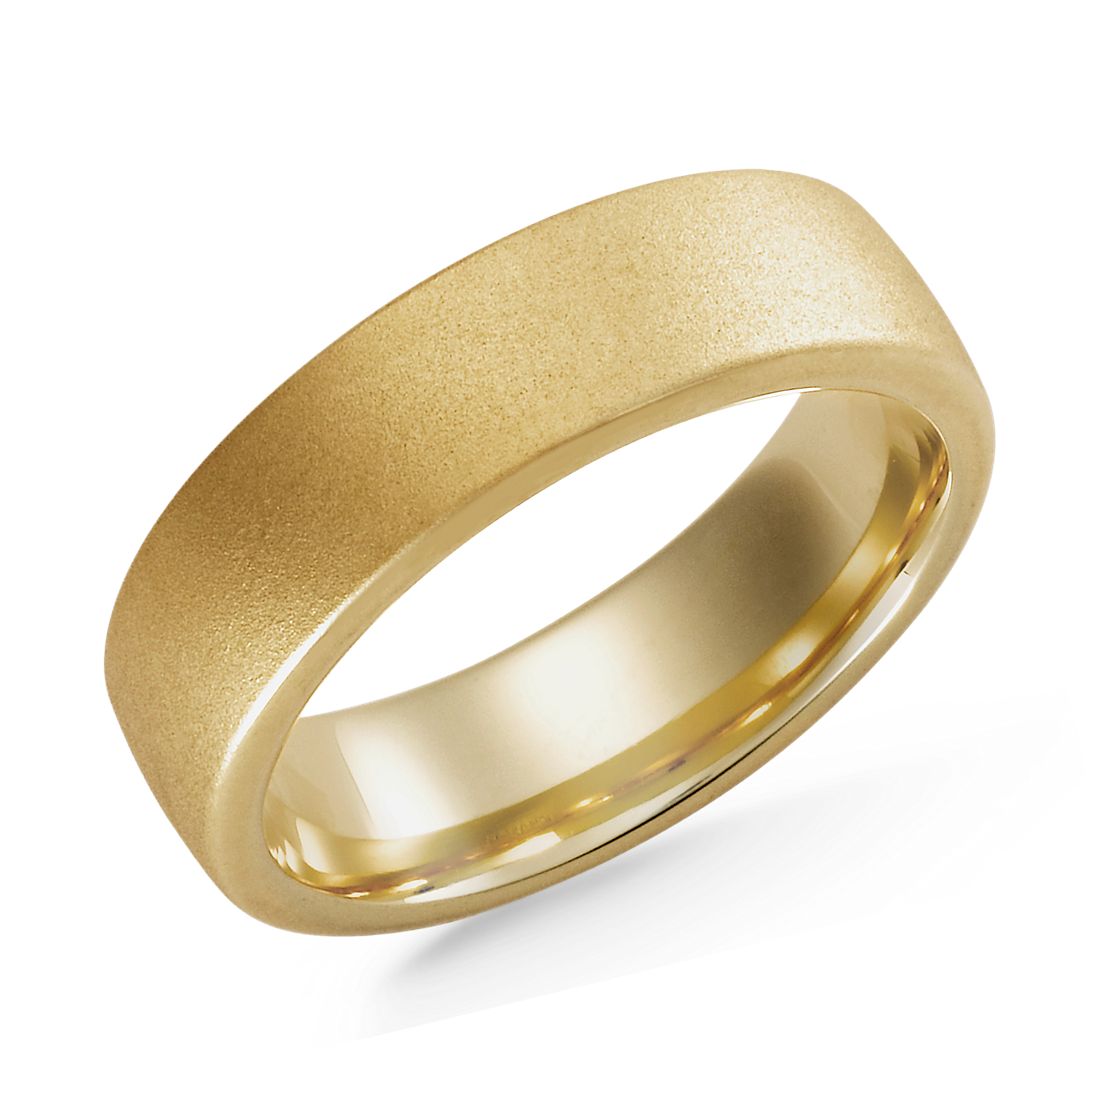 India Wirwar hypotheek Matte Wedding Ring in 18k Yellow Gold | Blue Nile